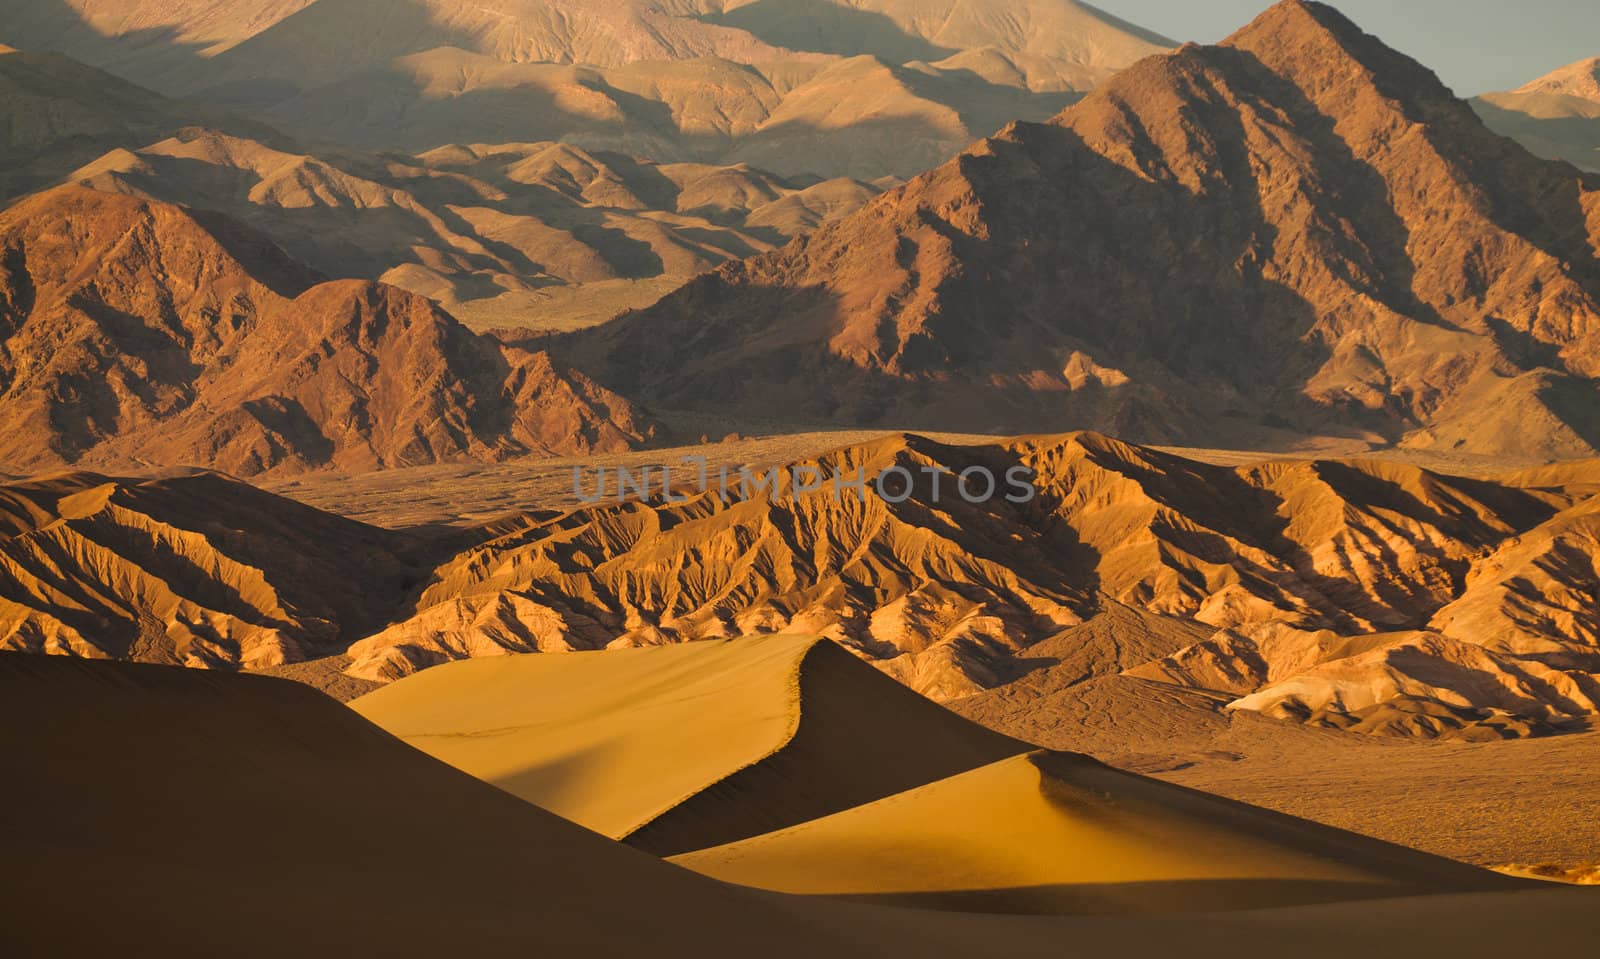 Dunes in Death Valley by jeffbanke